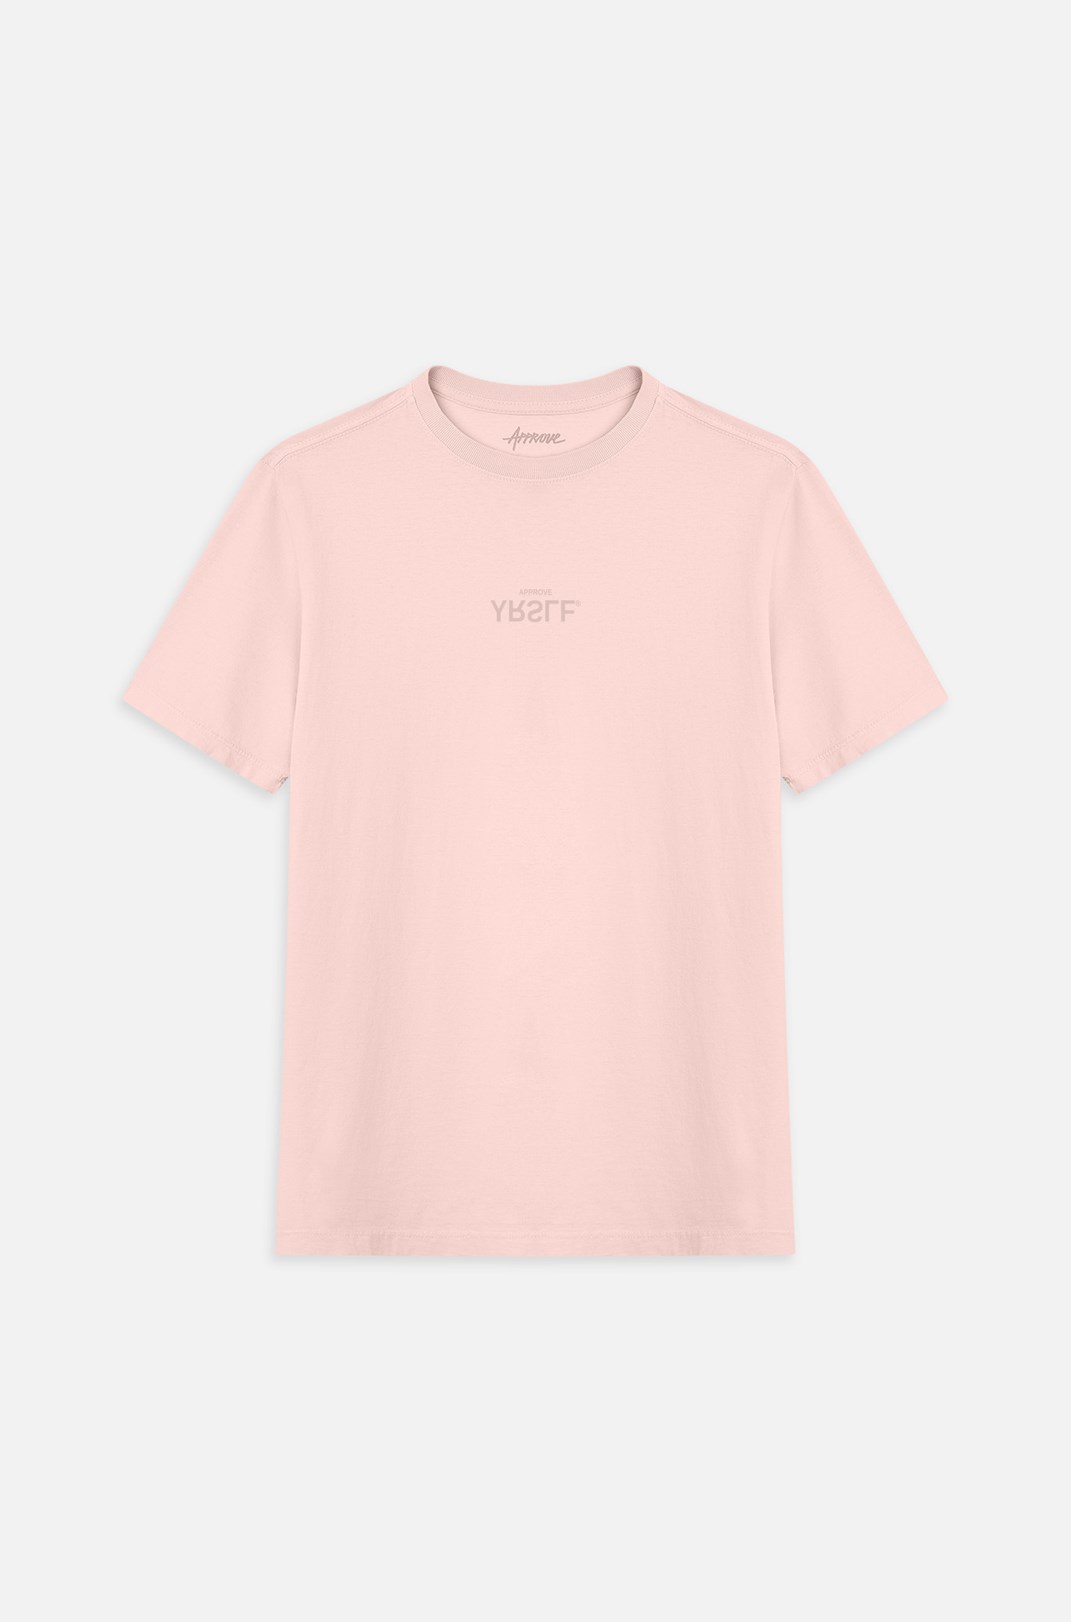 Camiseta Bold Approve Yrslf Inverse Collors Rosa Claro